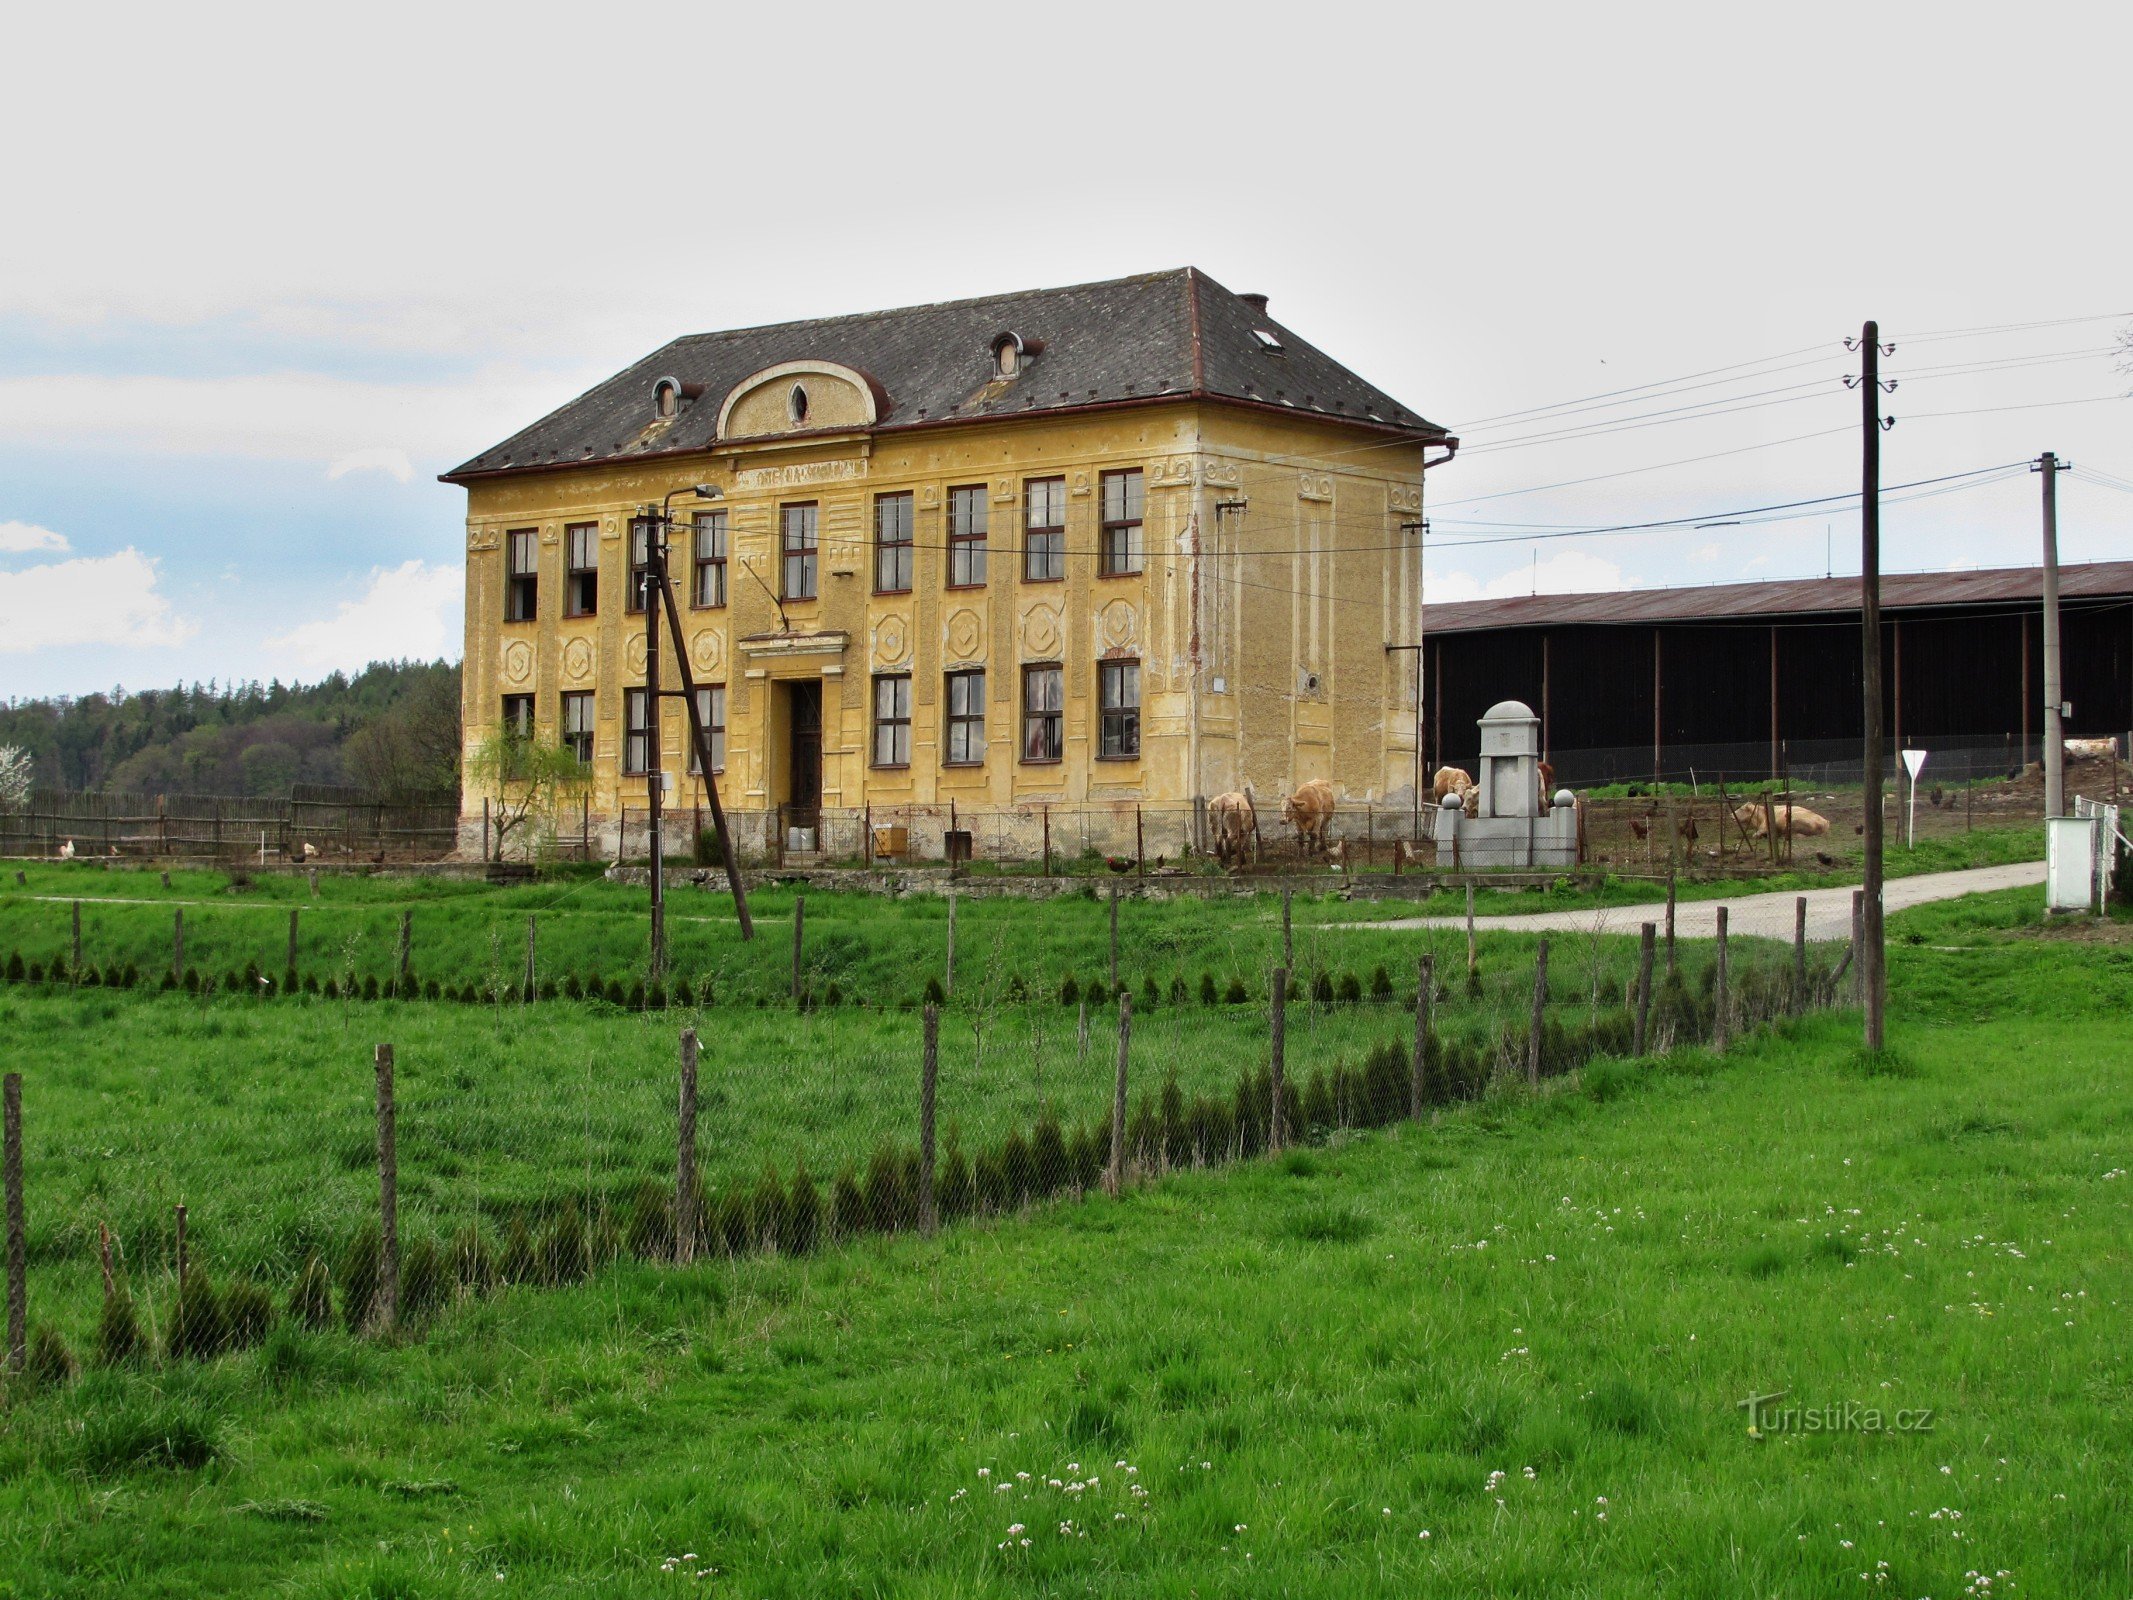 Nedvezí (Rohle) – German municipal school